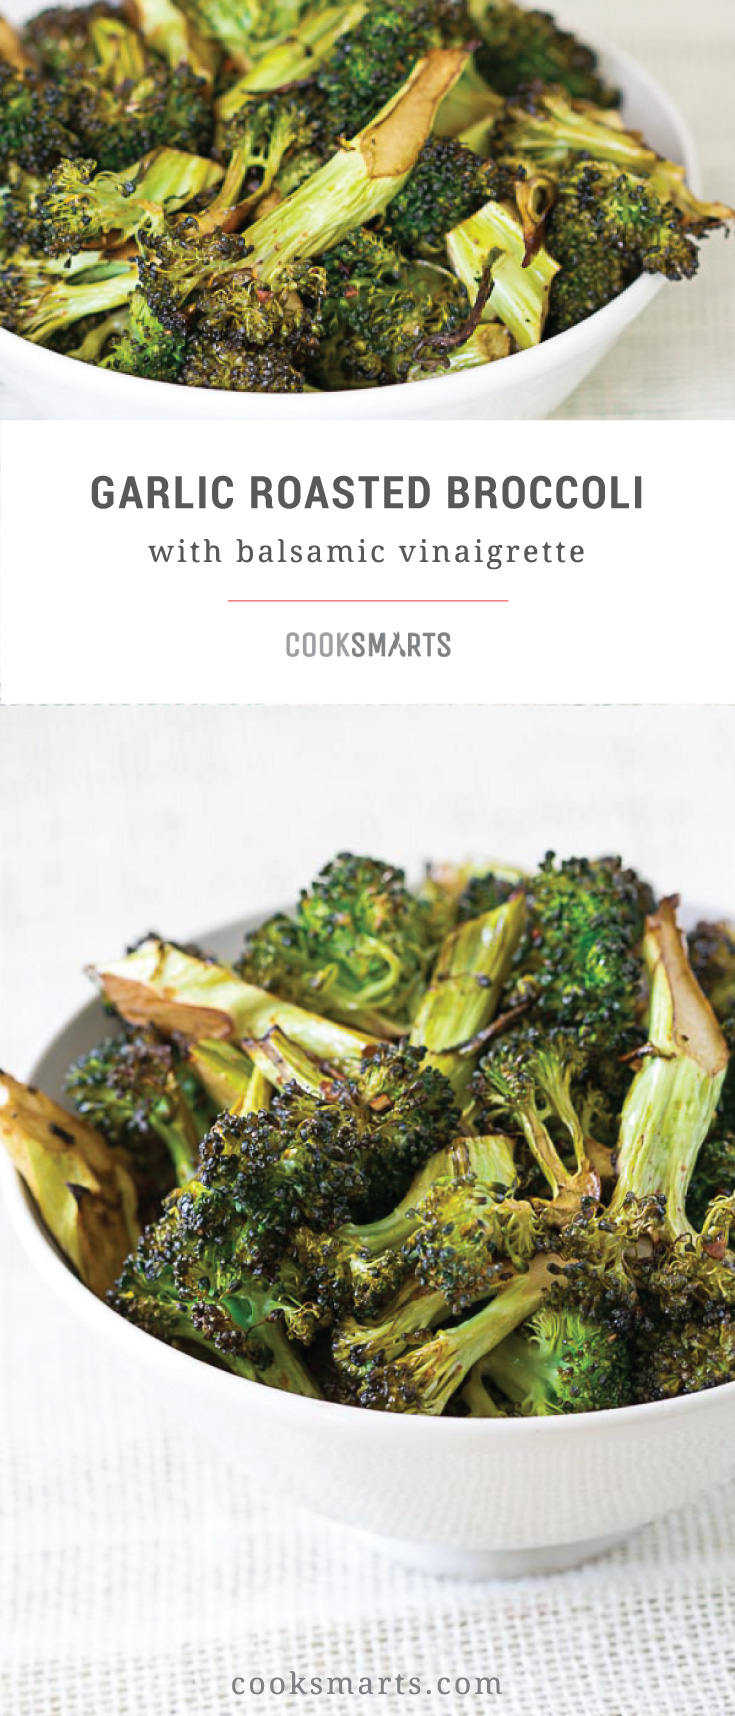 Cook Smarts Recipe: Garlic Roasted Broccoli with Balsamic Vinaigrette